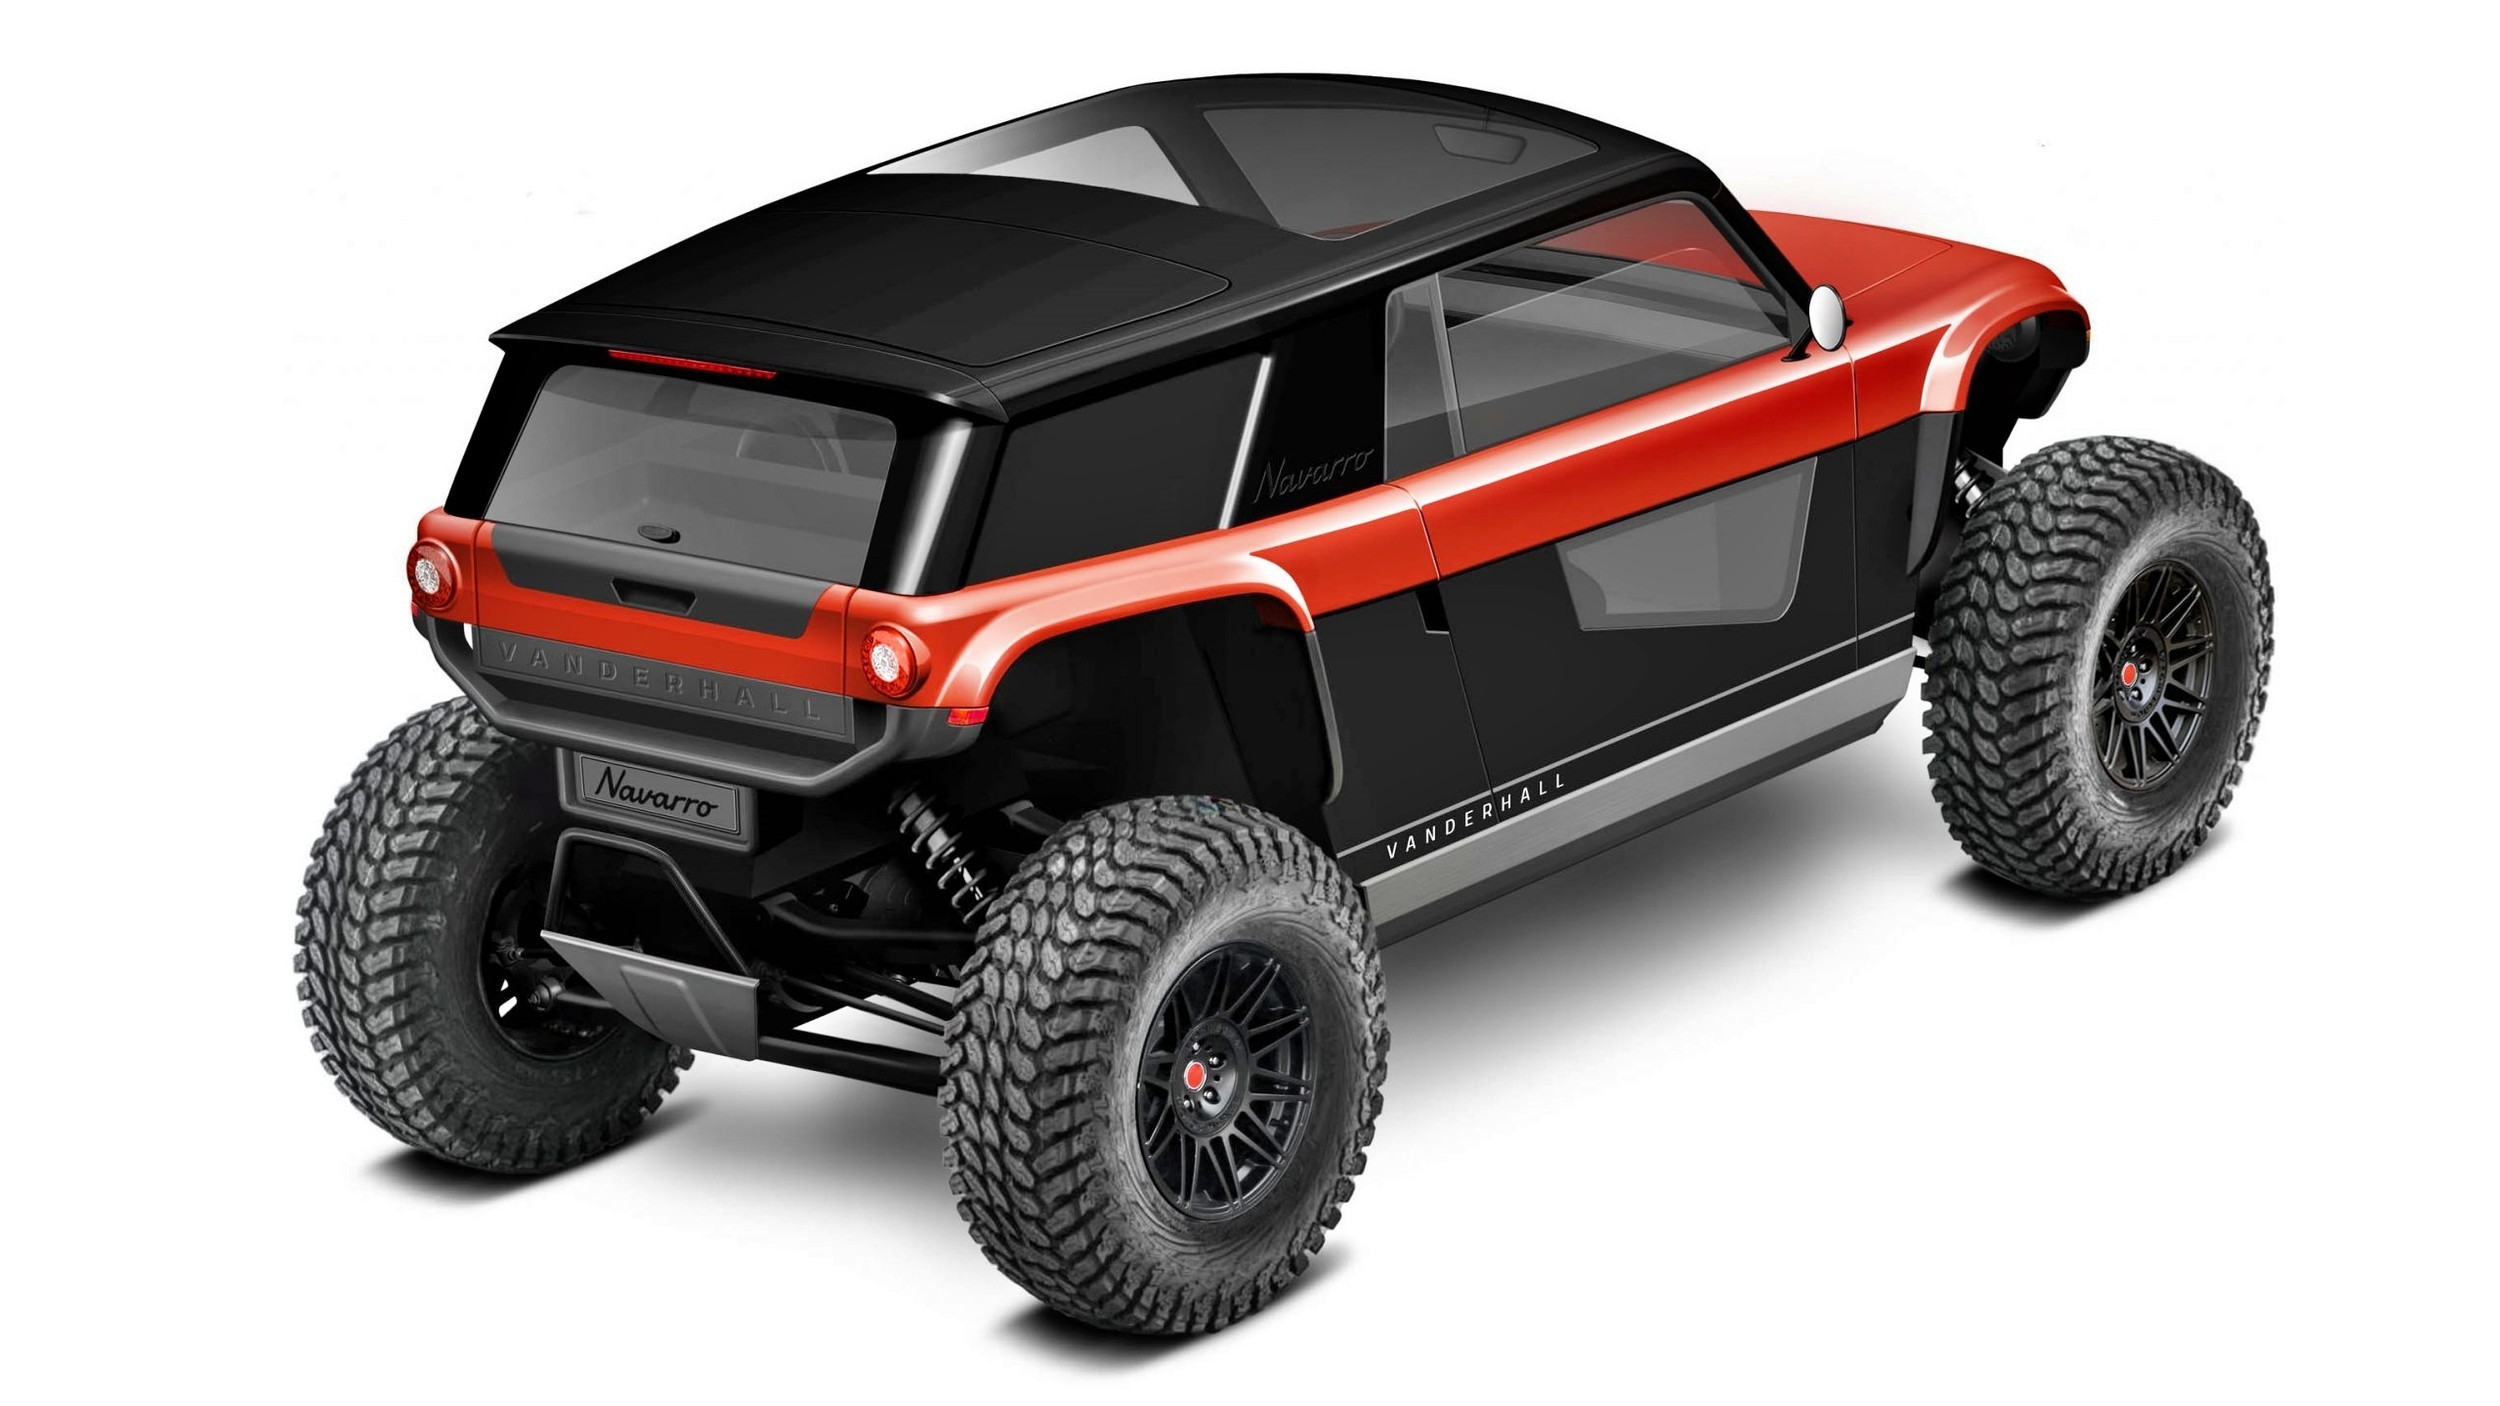 Vanderhall Navarro превзойдёт Ford Bronco и Jeep Wrangler по геометрической проходимости